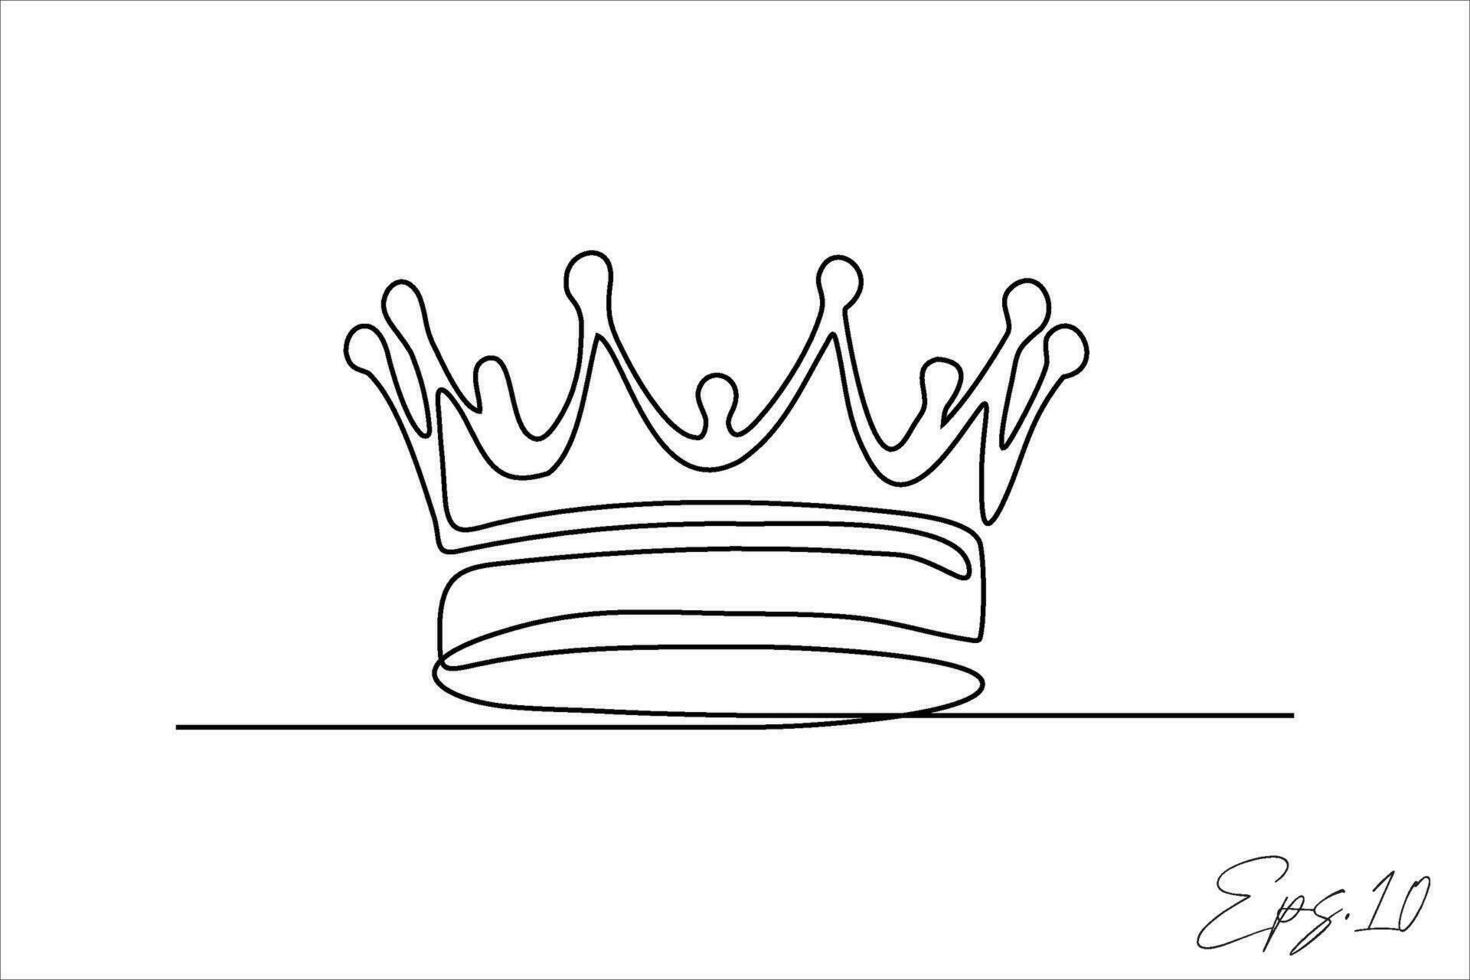 kontinuerlig linje konst teckning av kungens krona vektor